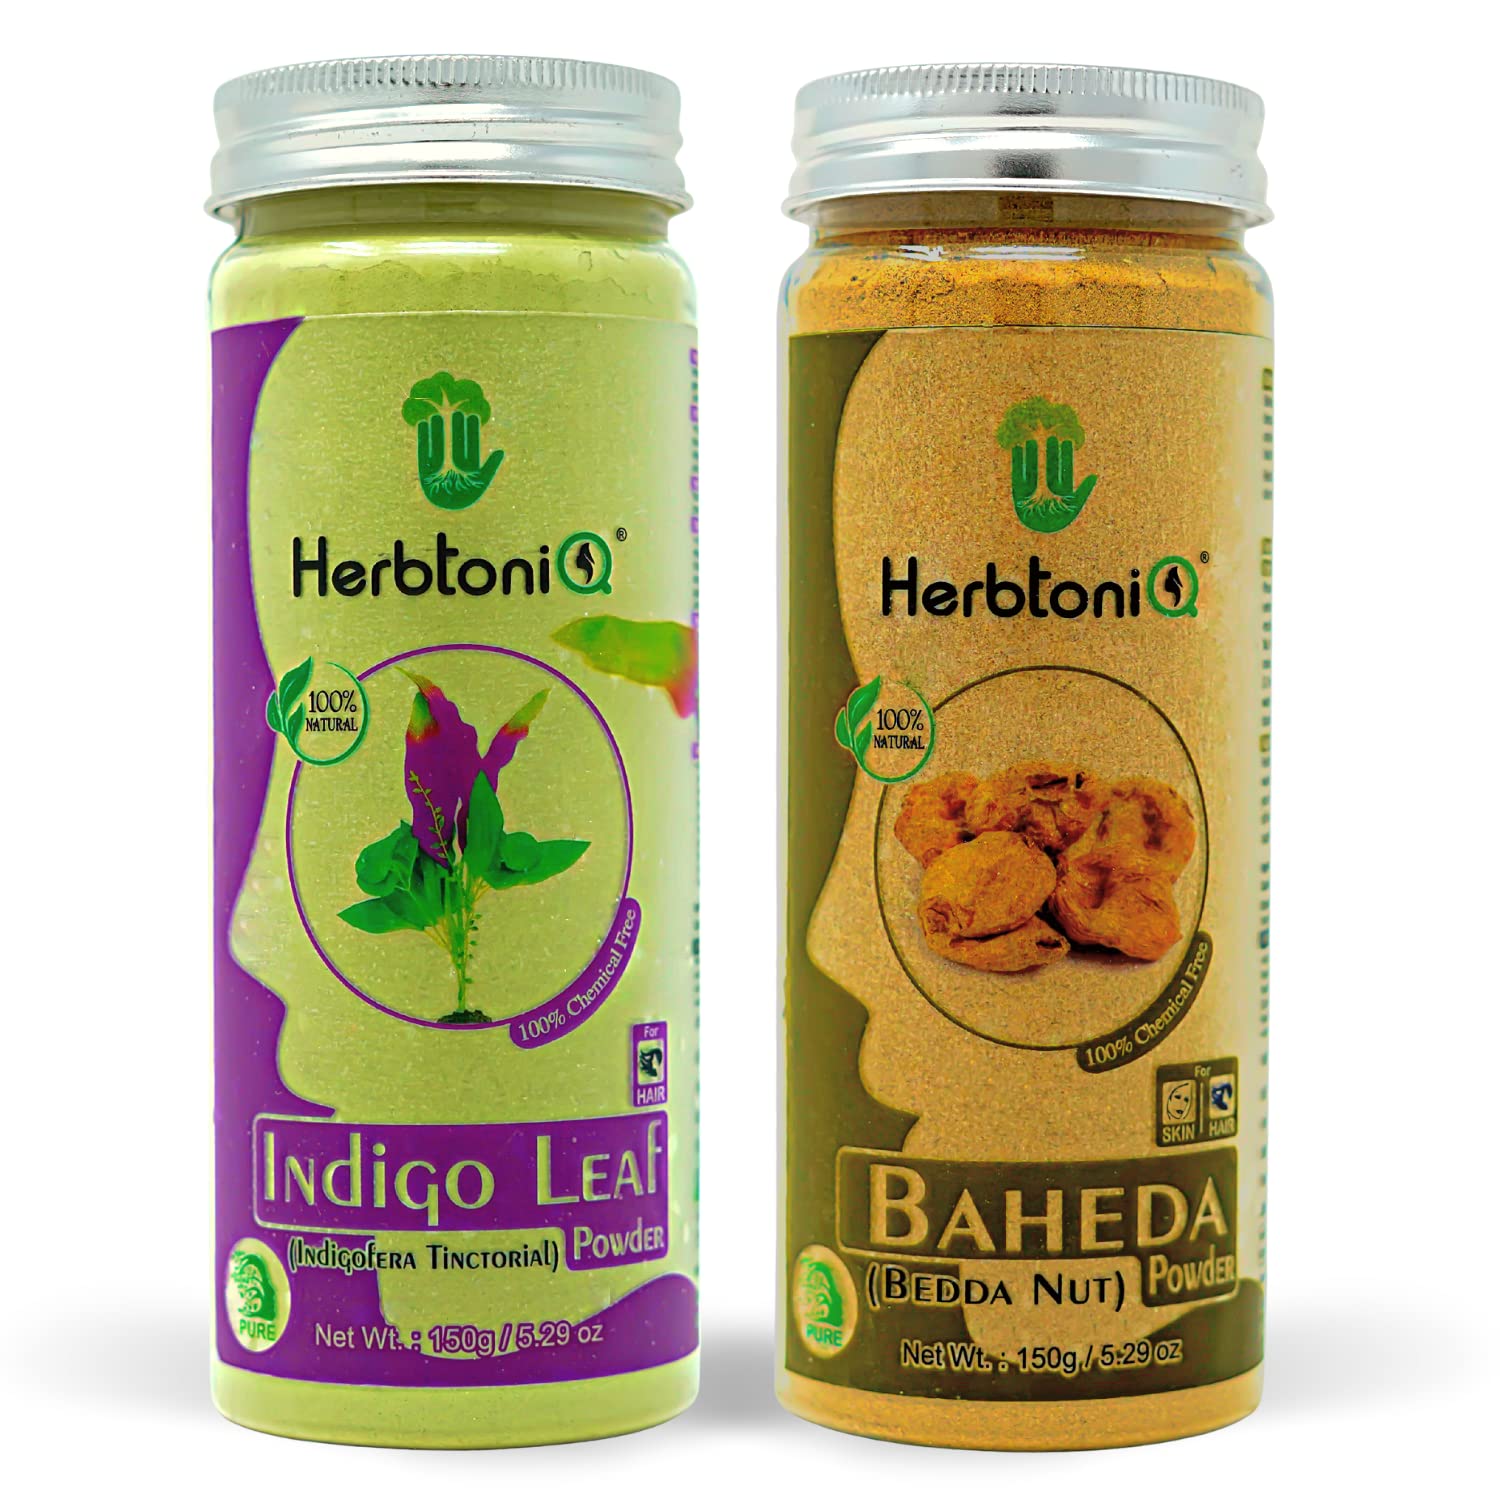 HerbtoniQ 100% Natural Indigo Leaf and Baheda Powder for Dandruff, Frizzy Hair, Damaged Hair, Intensive Hair Care Pack (300 Gram)